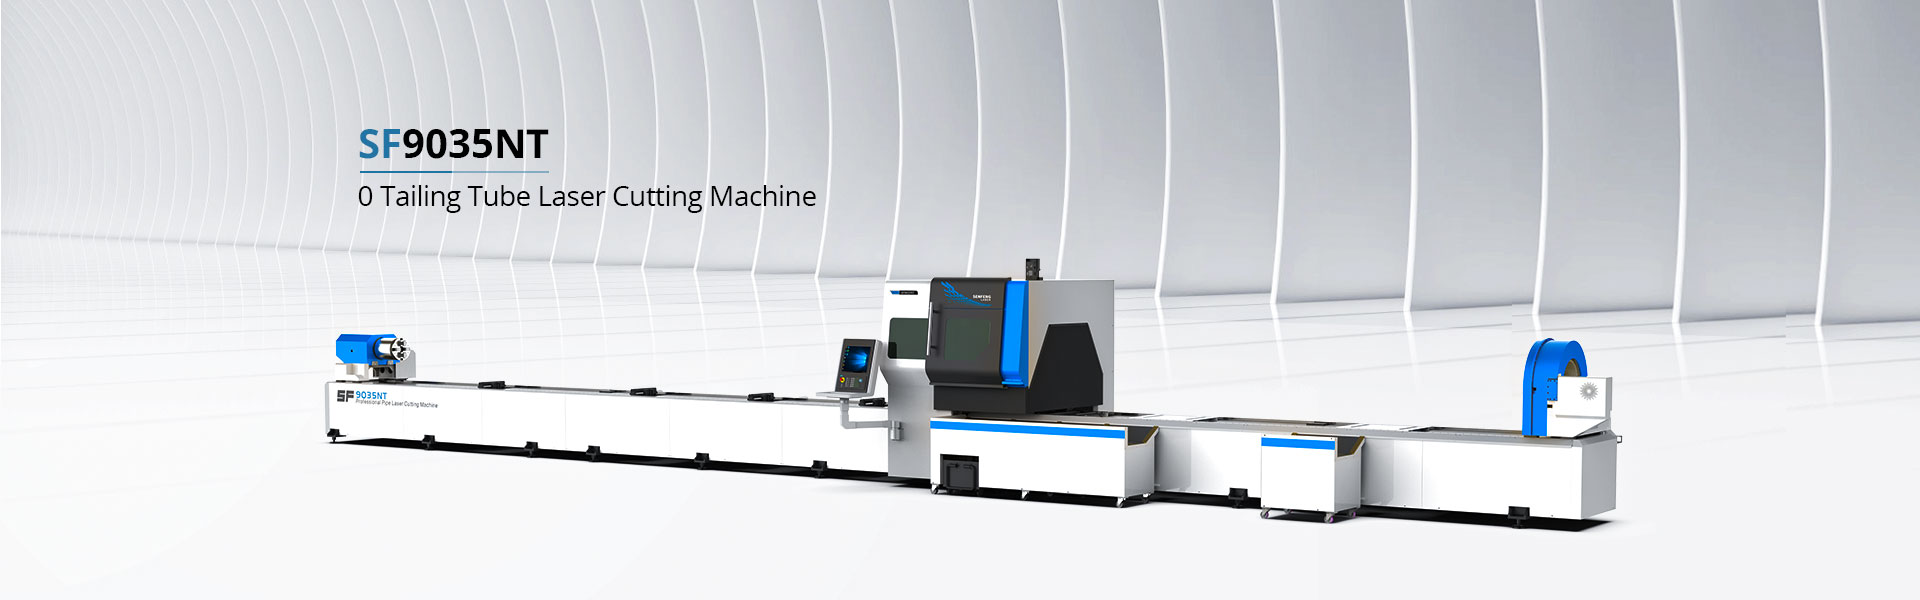 0 Tailing Tube Laser Cutting Machine